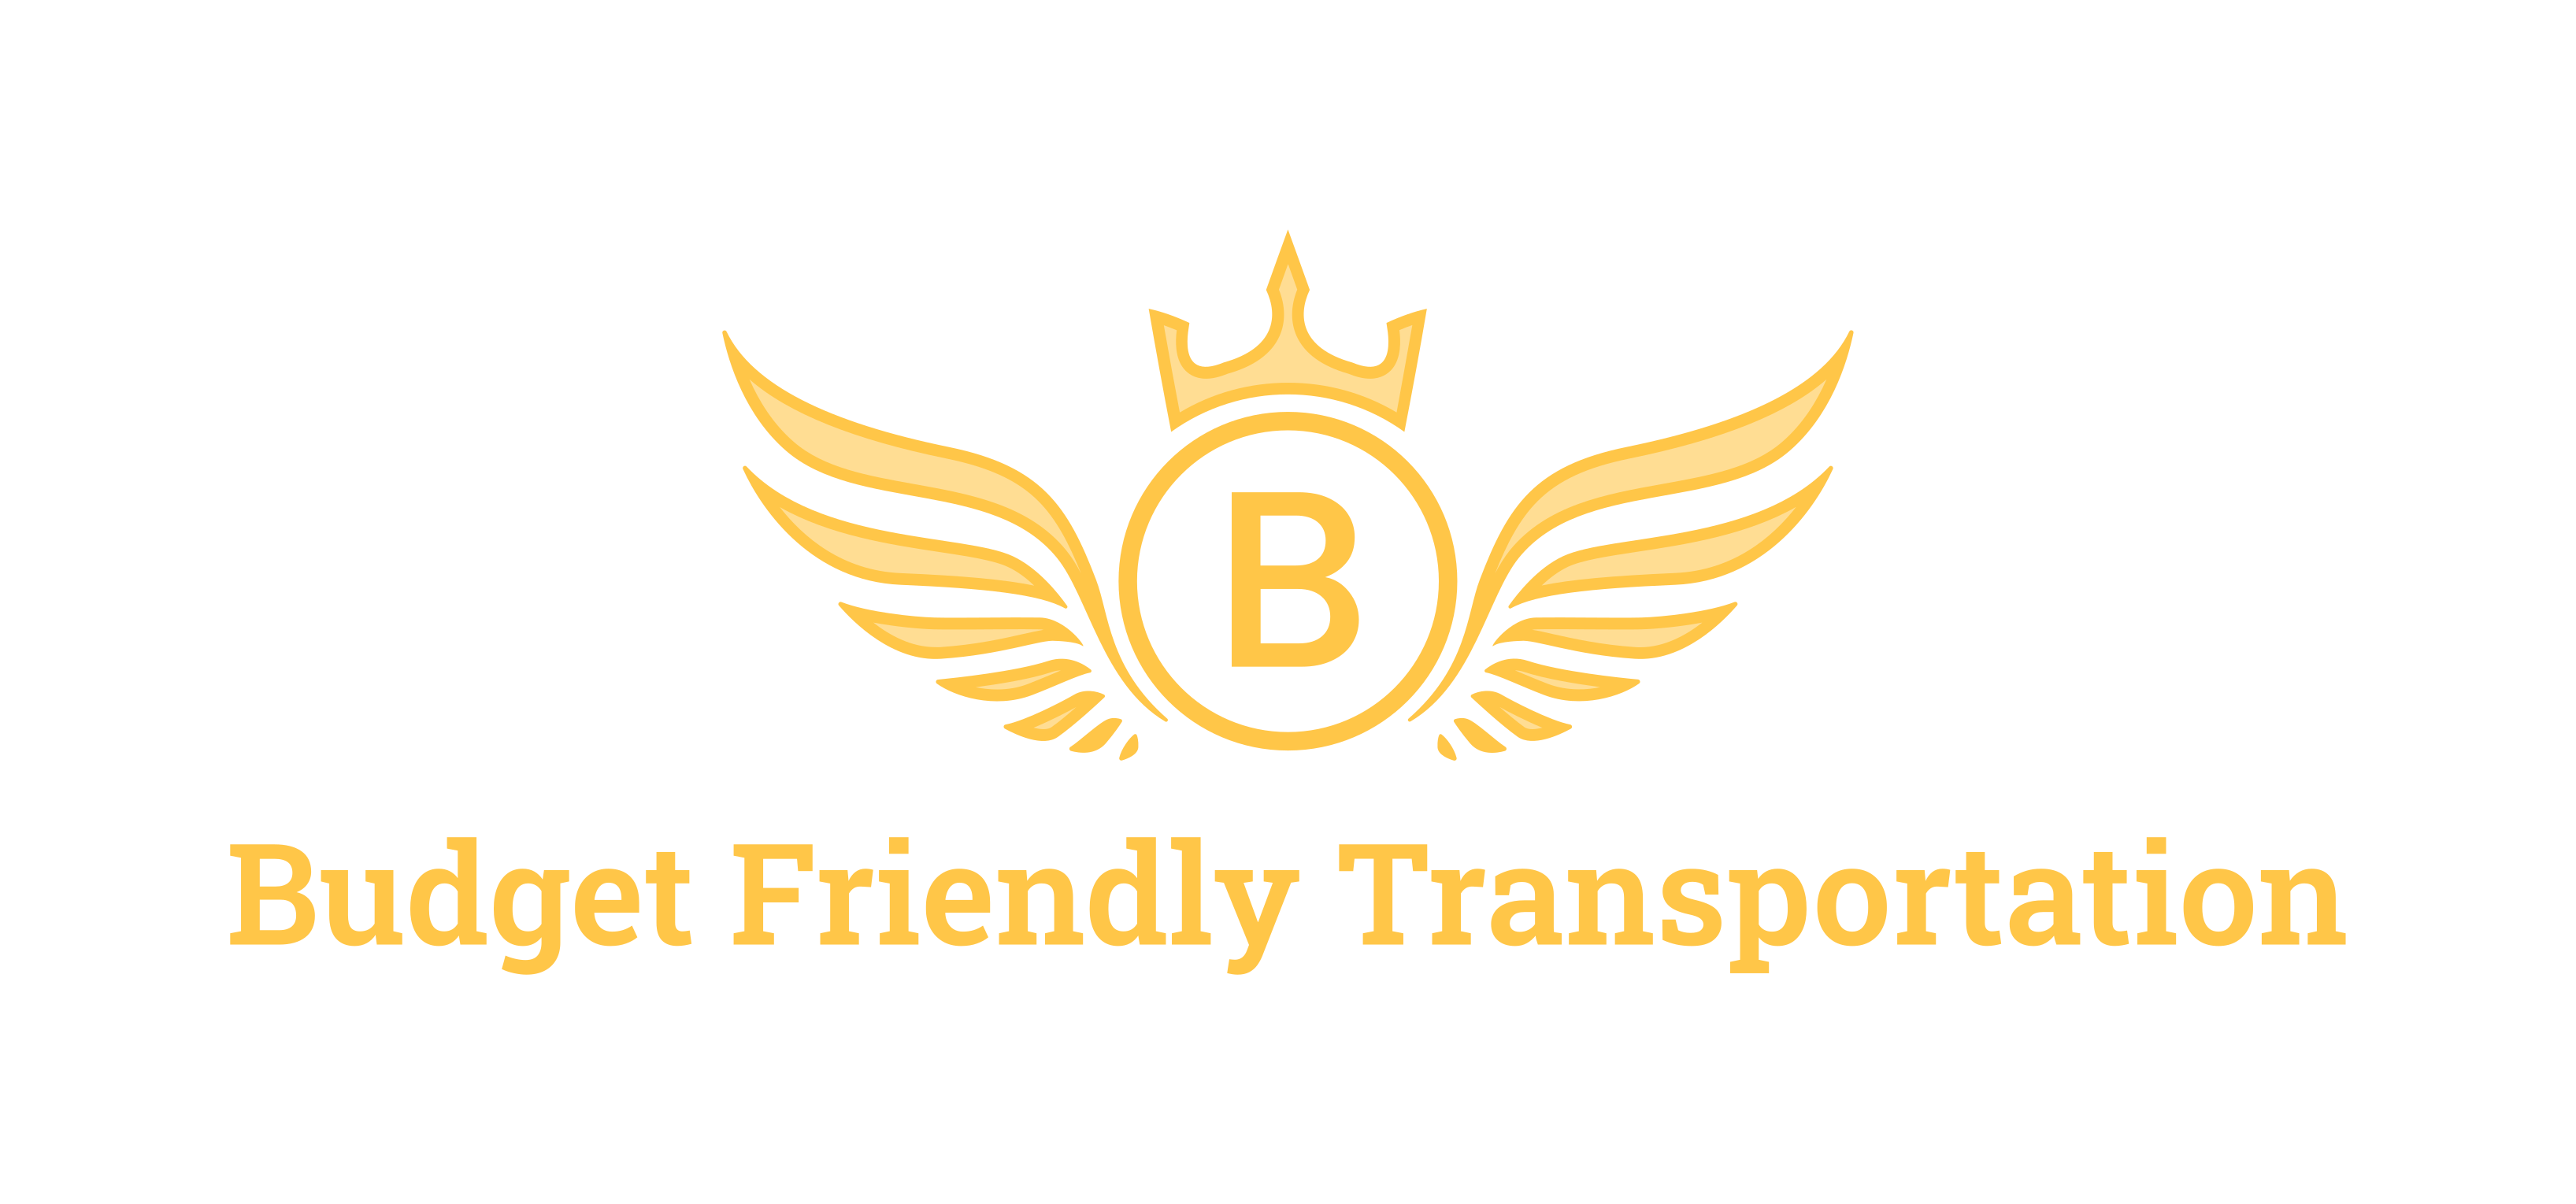 Budget Friendly Transportation